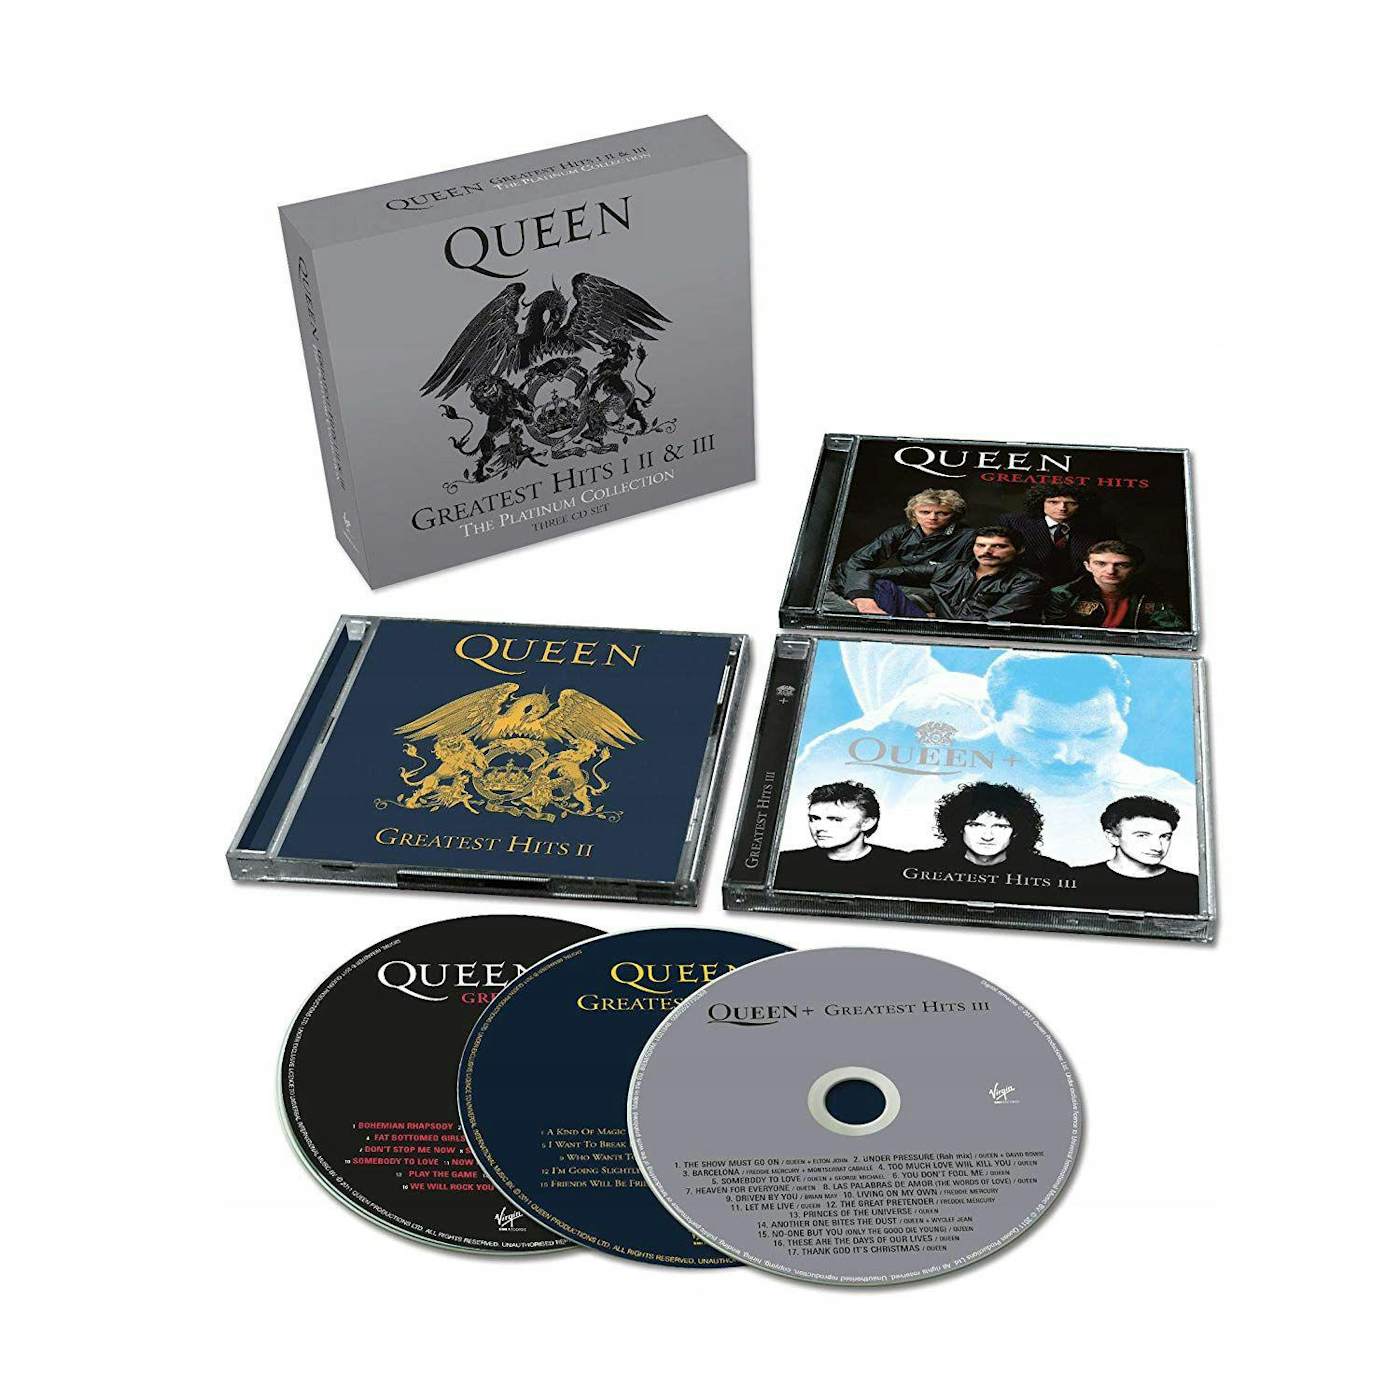  Queen [Remastered]: CDs y Vinilo